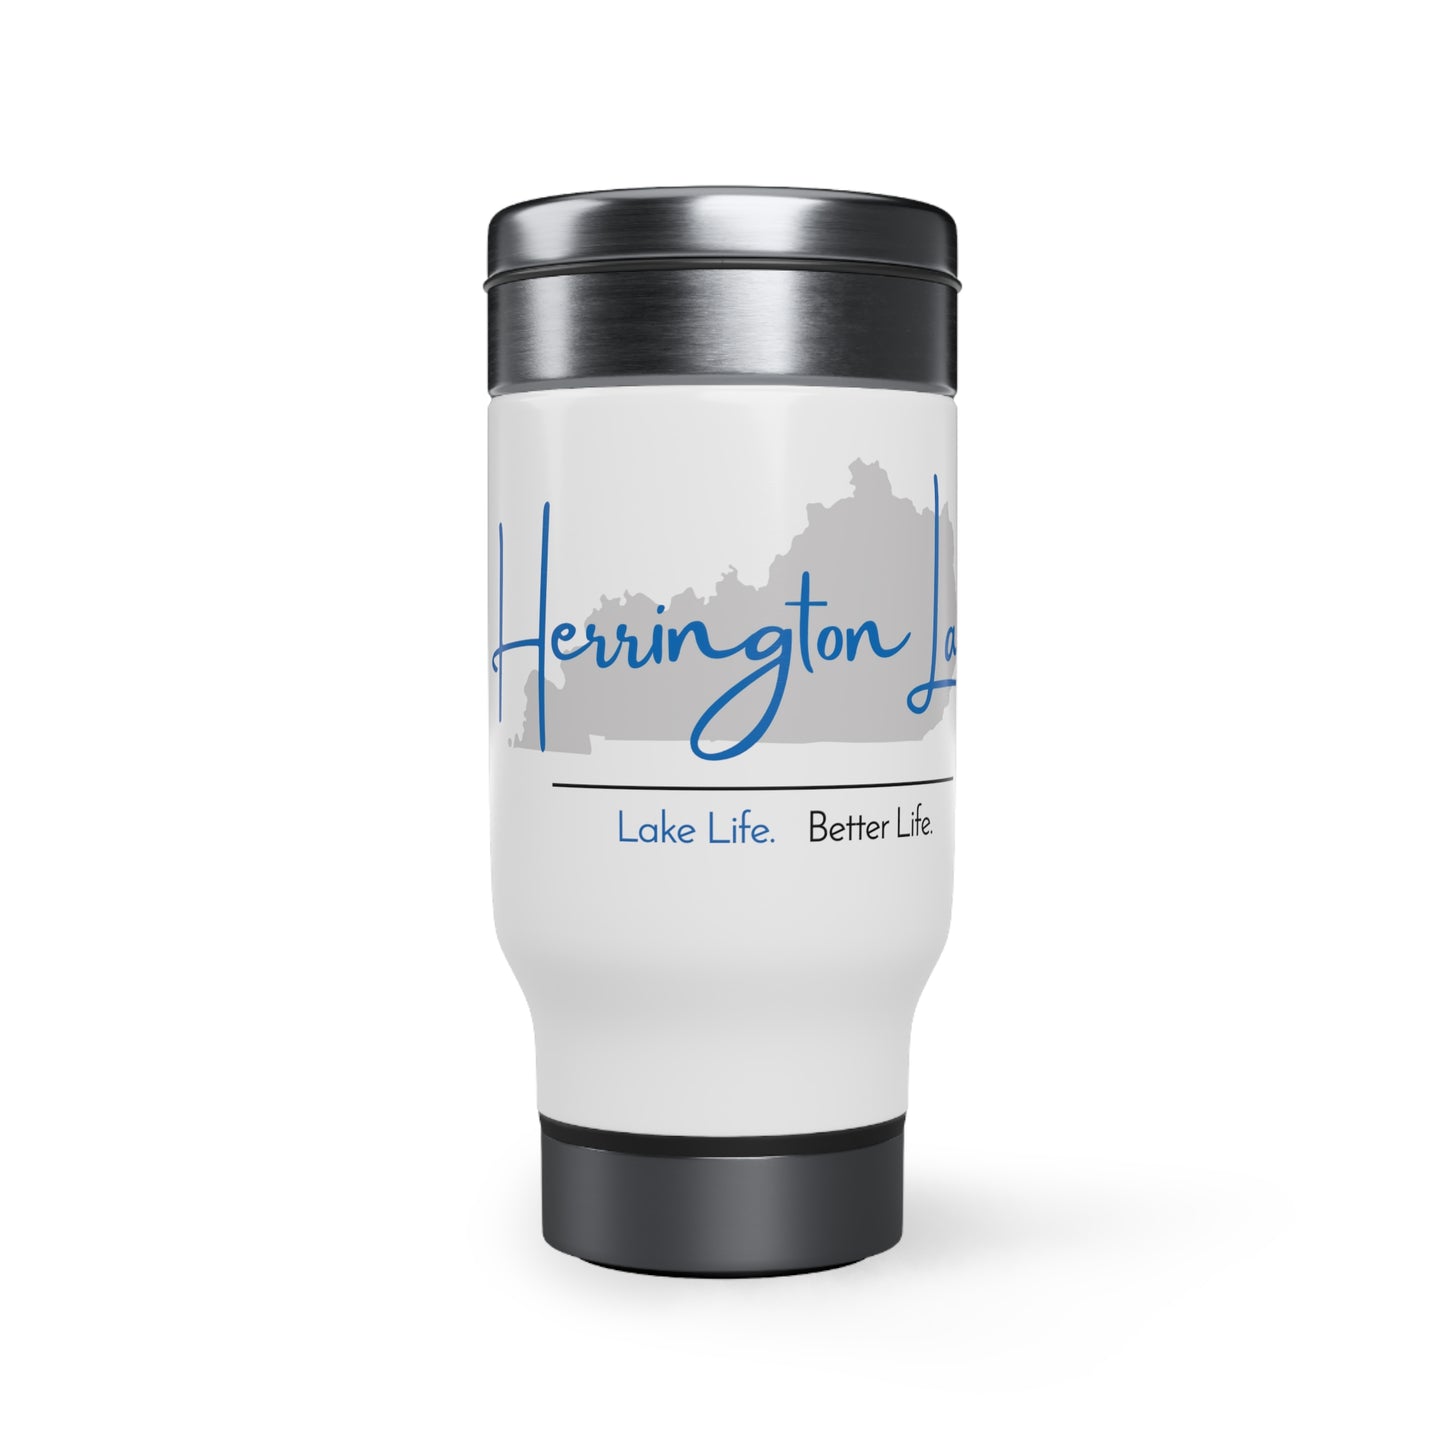 Herrington Lake Signature Collection Stainless Steel Travel Mug with Handle, 14oz